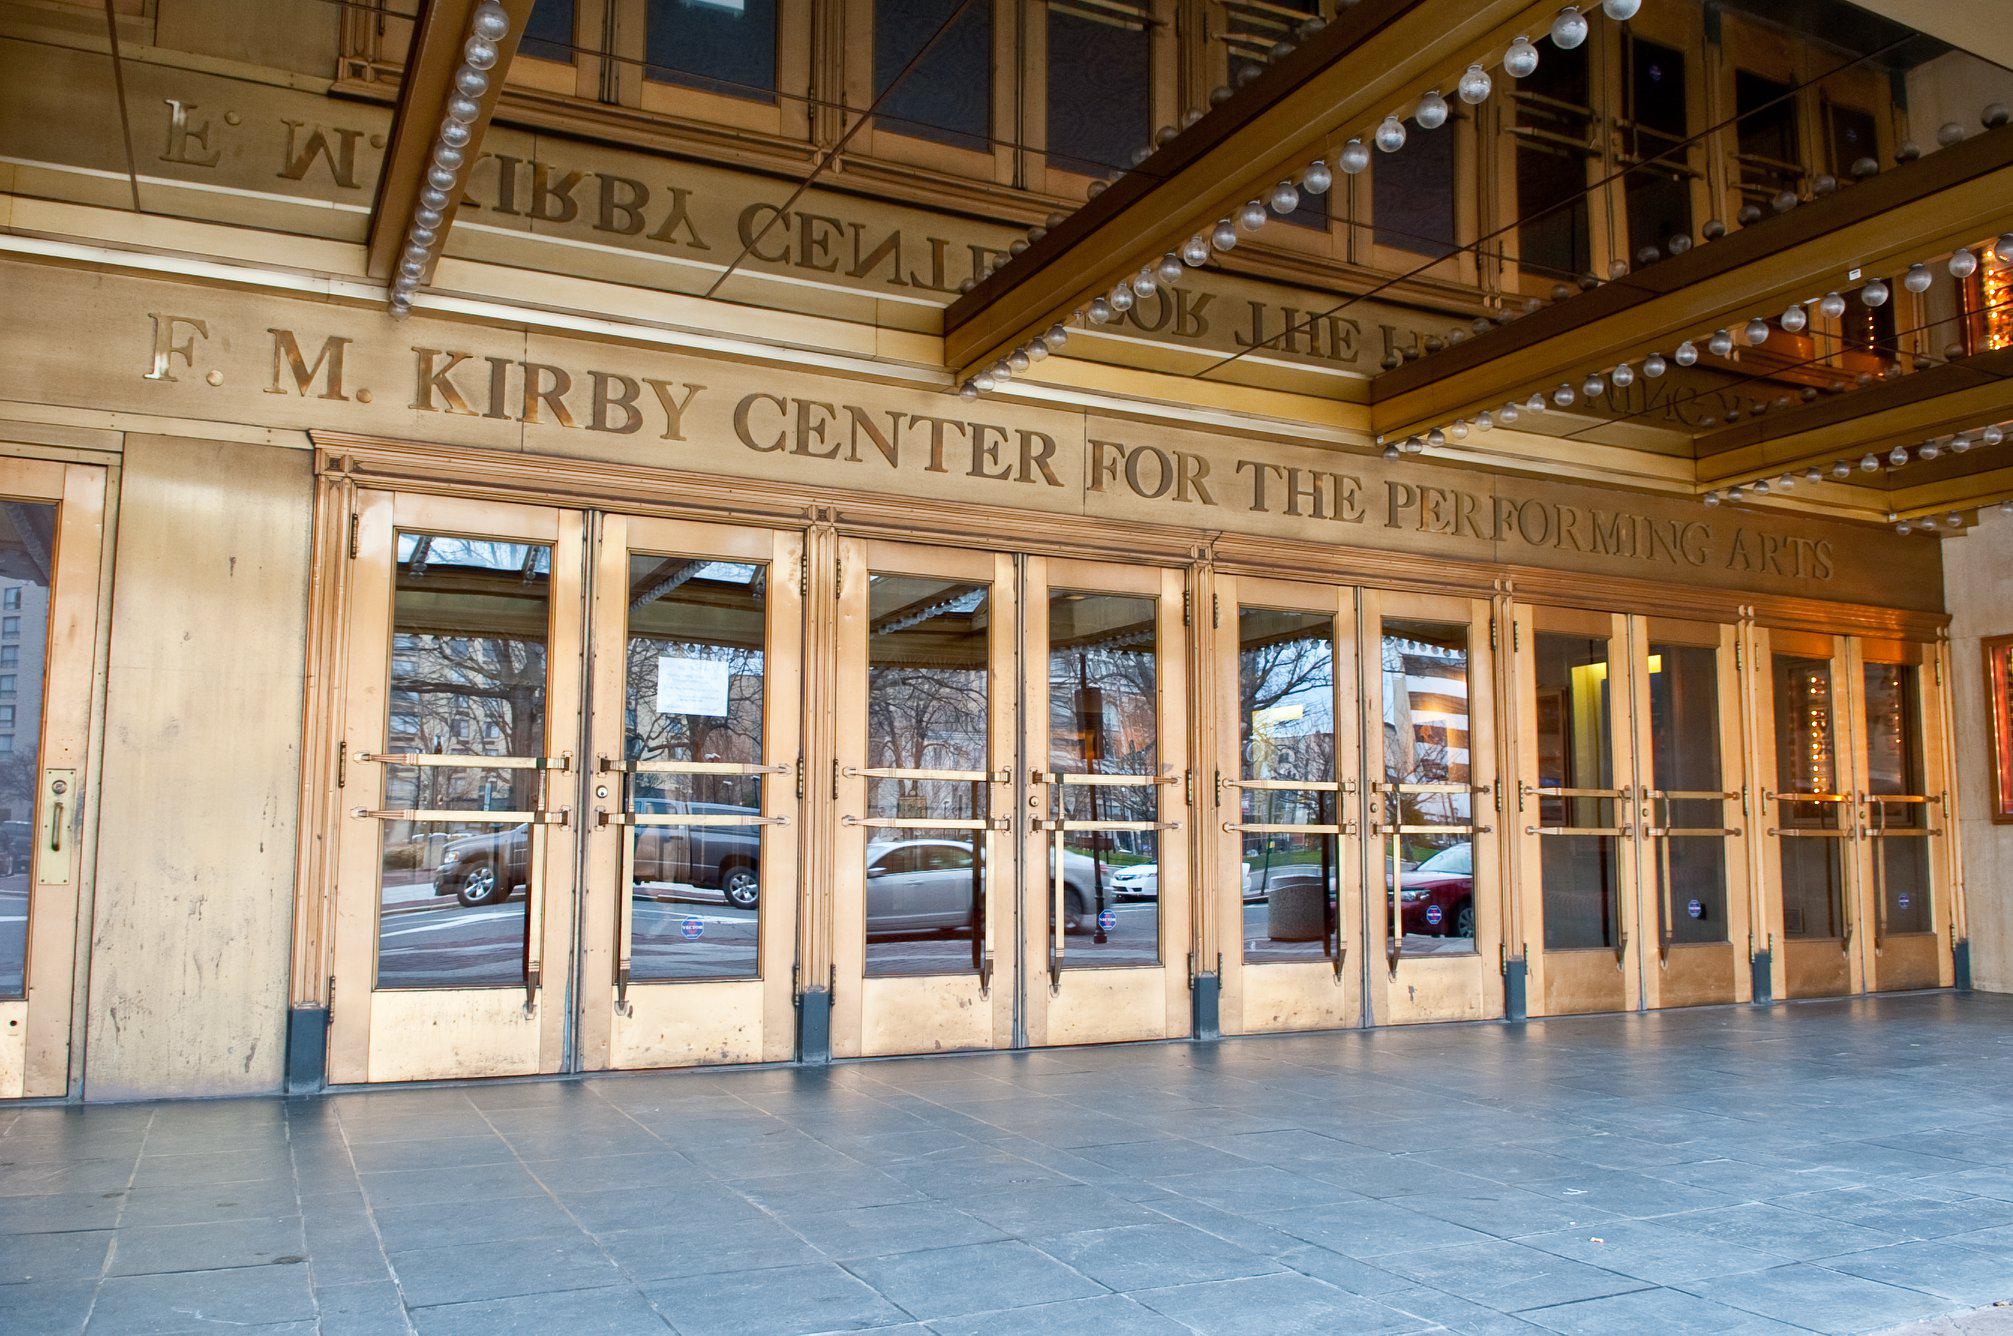 F. M. Kirby Center